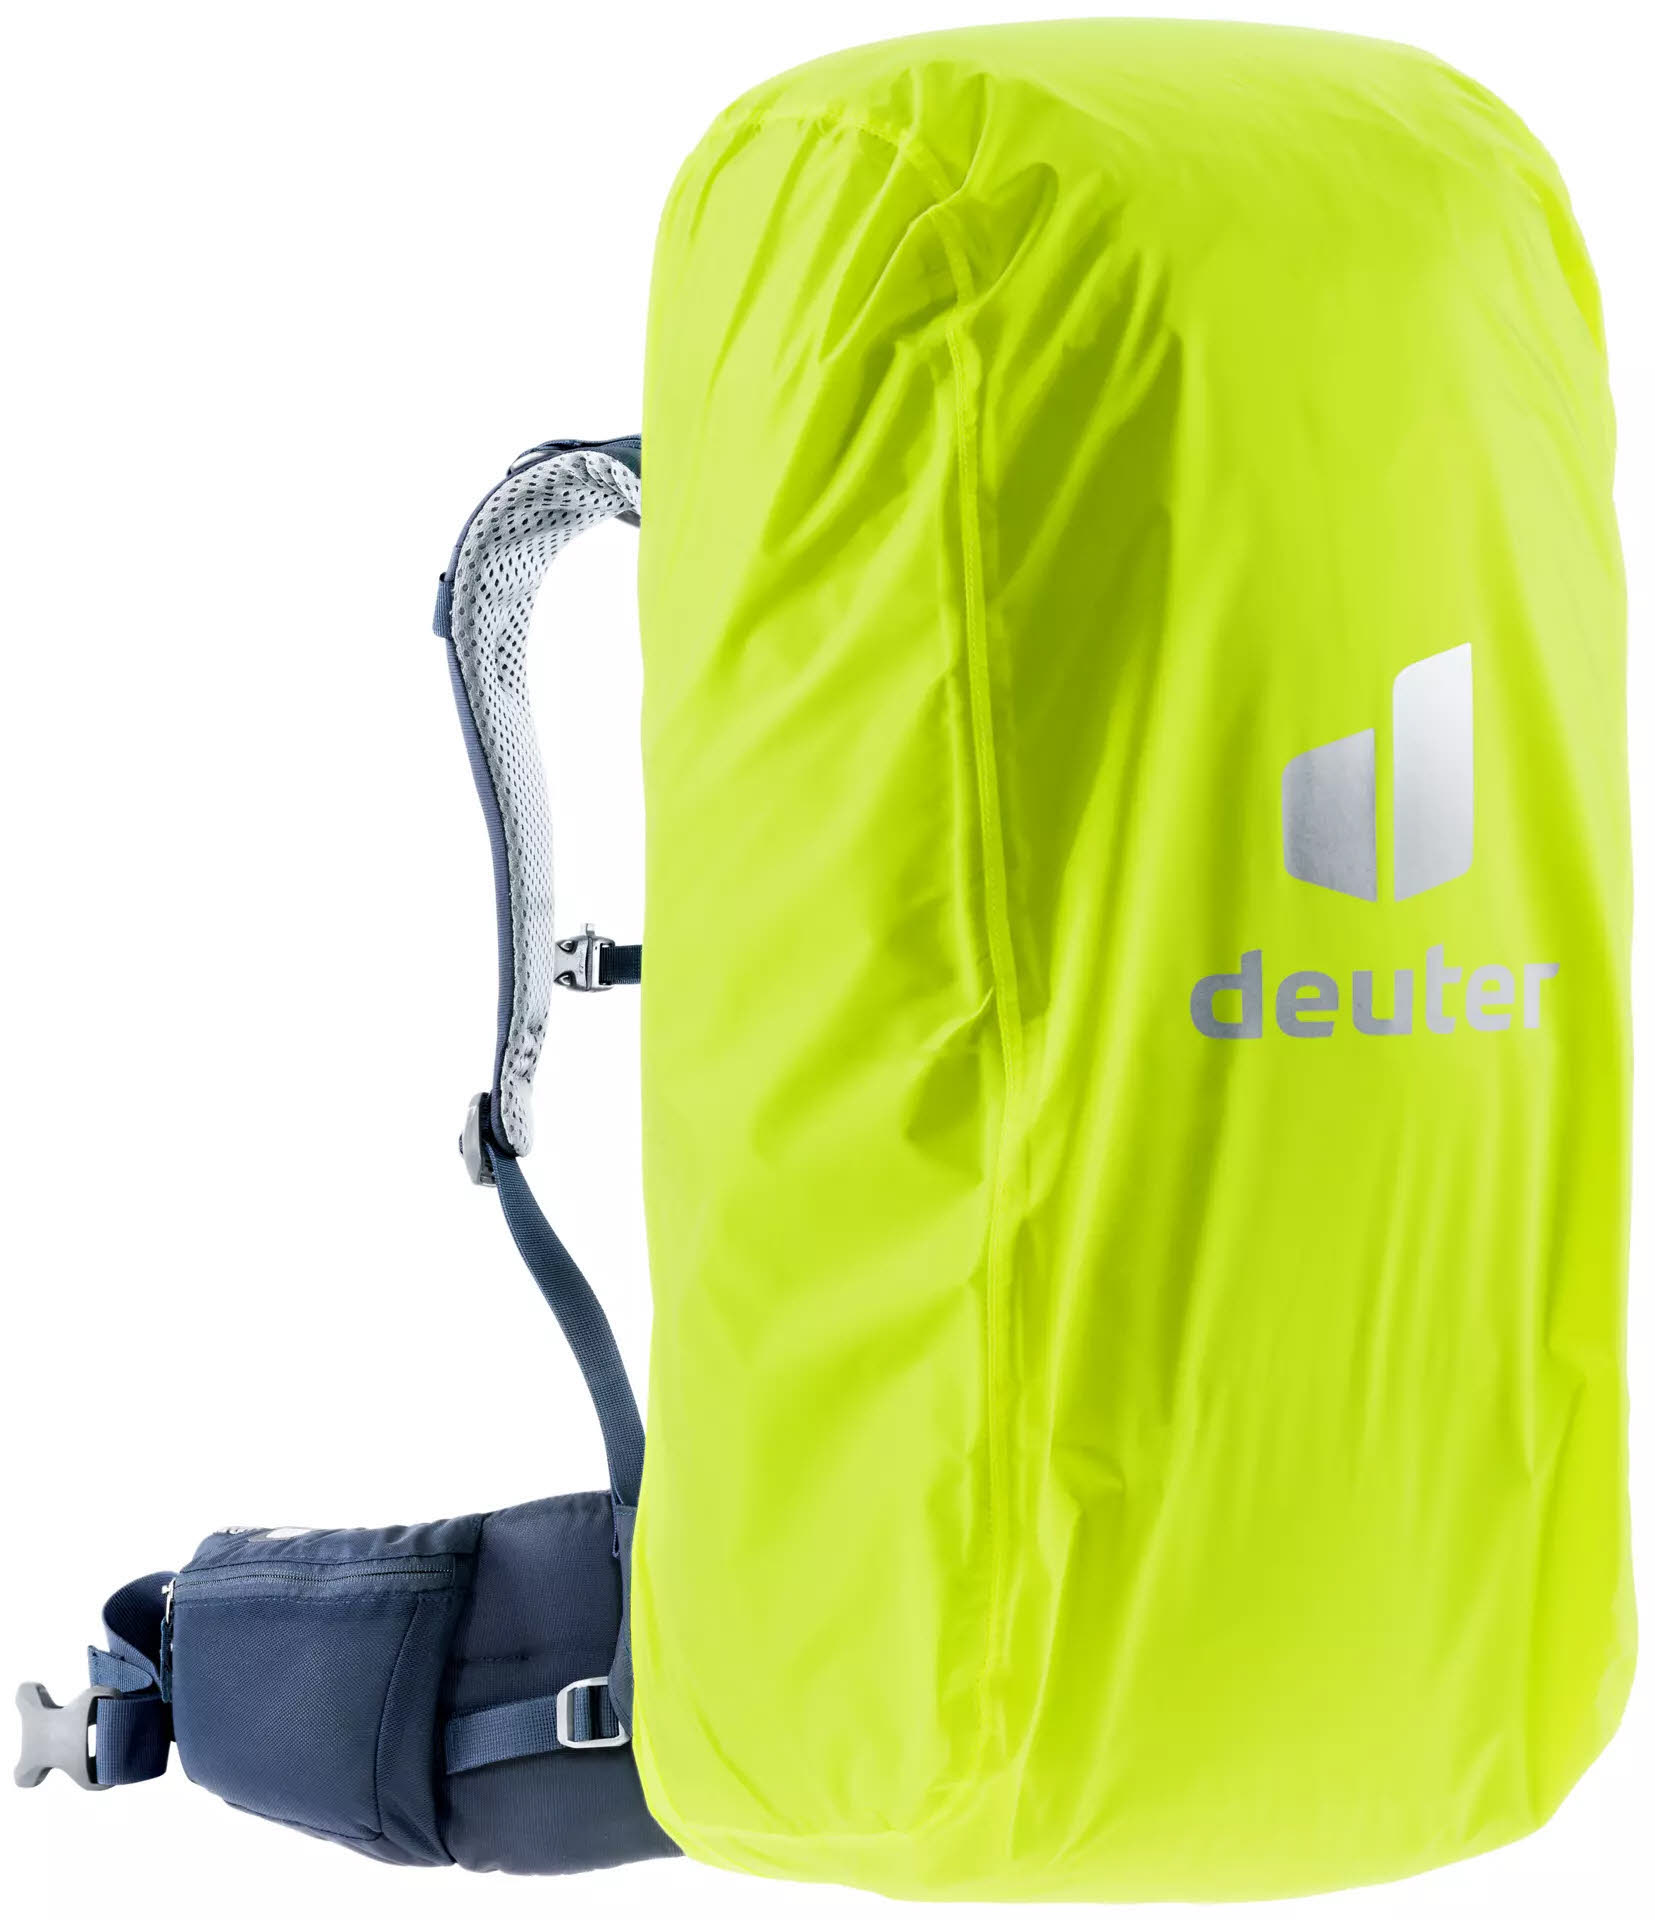 Deuter Rain Cover II 30-50L Regenüberzugtasche für Rucksäcke Regenschutzhülle neon NEU